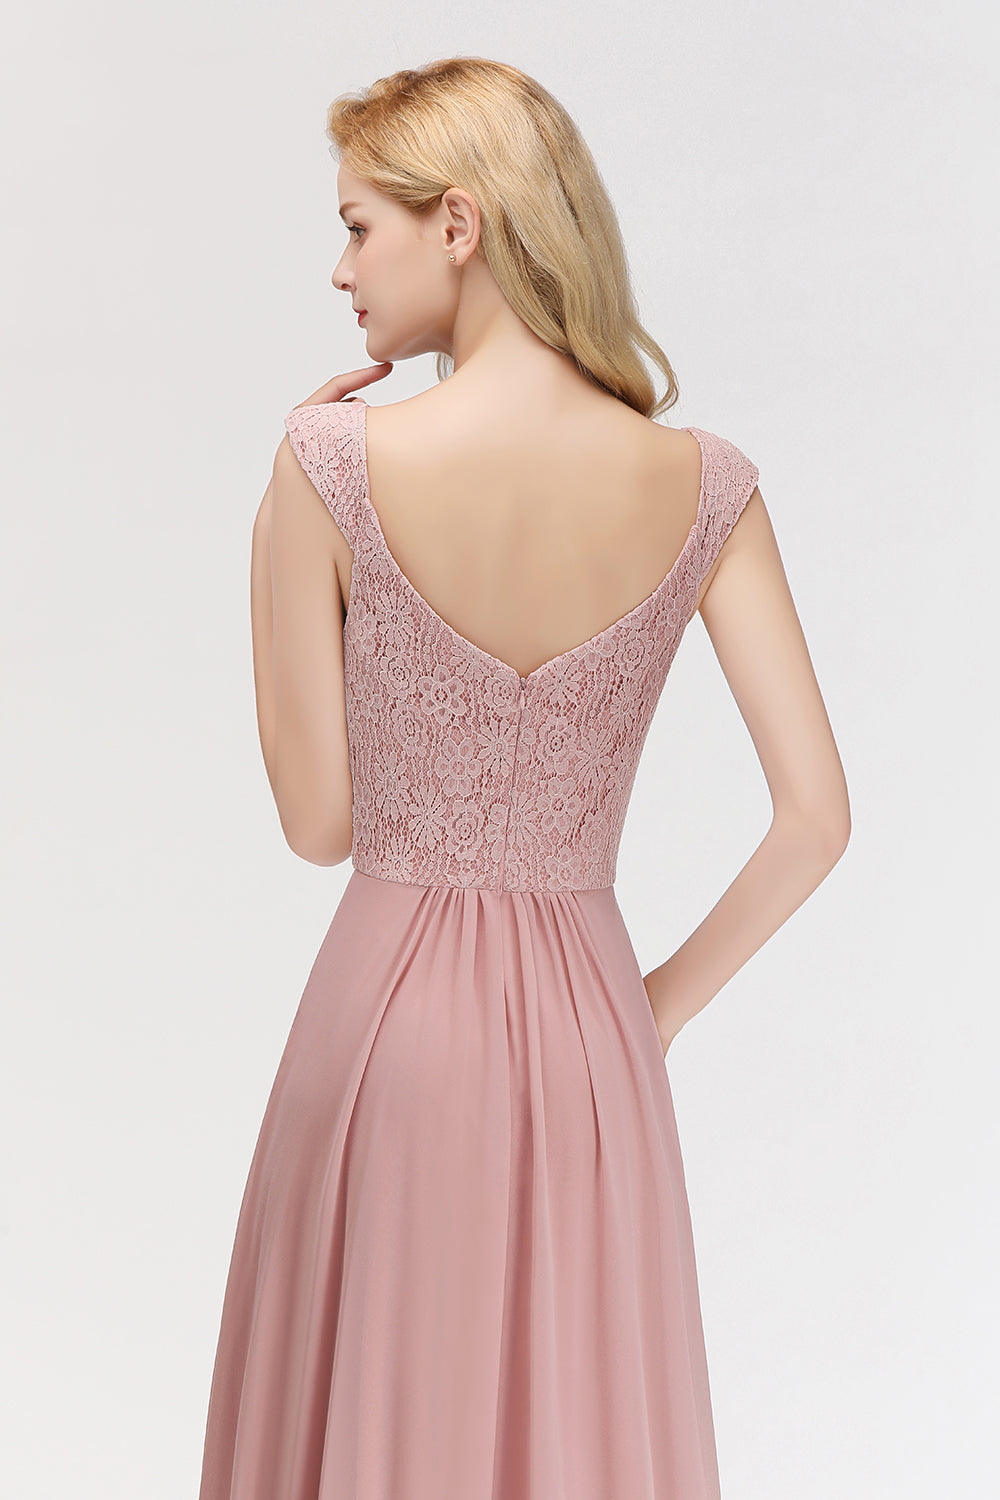 Elegant Lace Sweetheart Bridesmaid Dress Online Dusty Rose Chiffon Wedding Party Dress